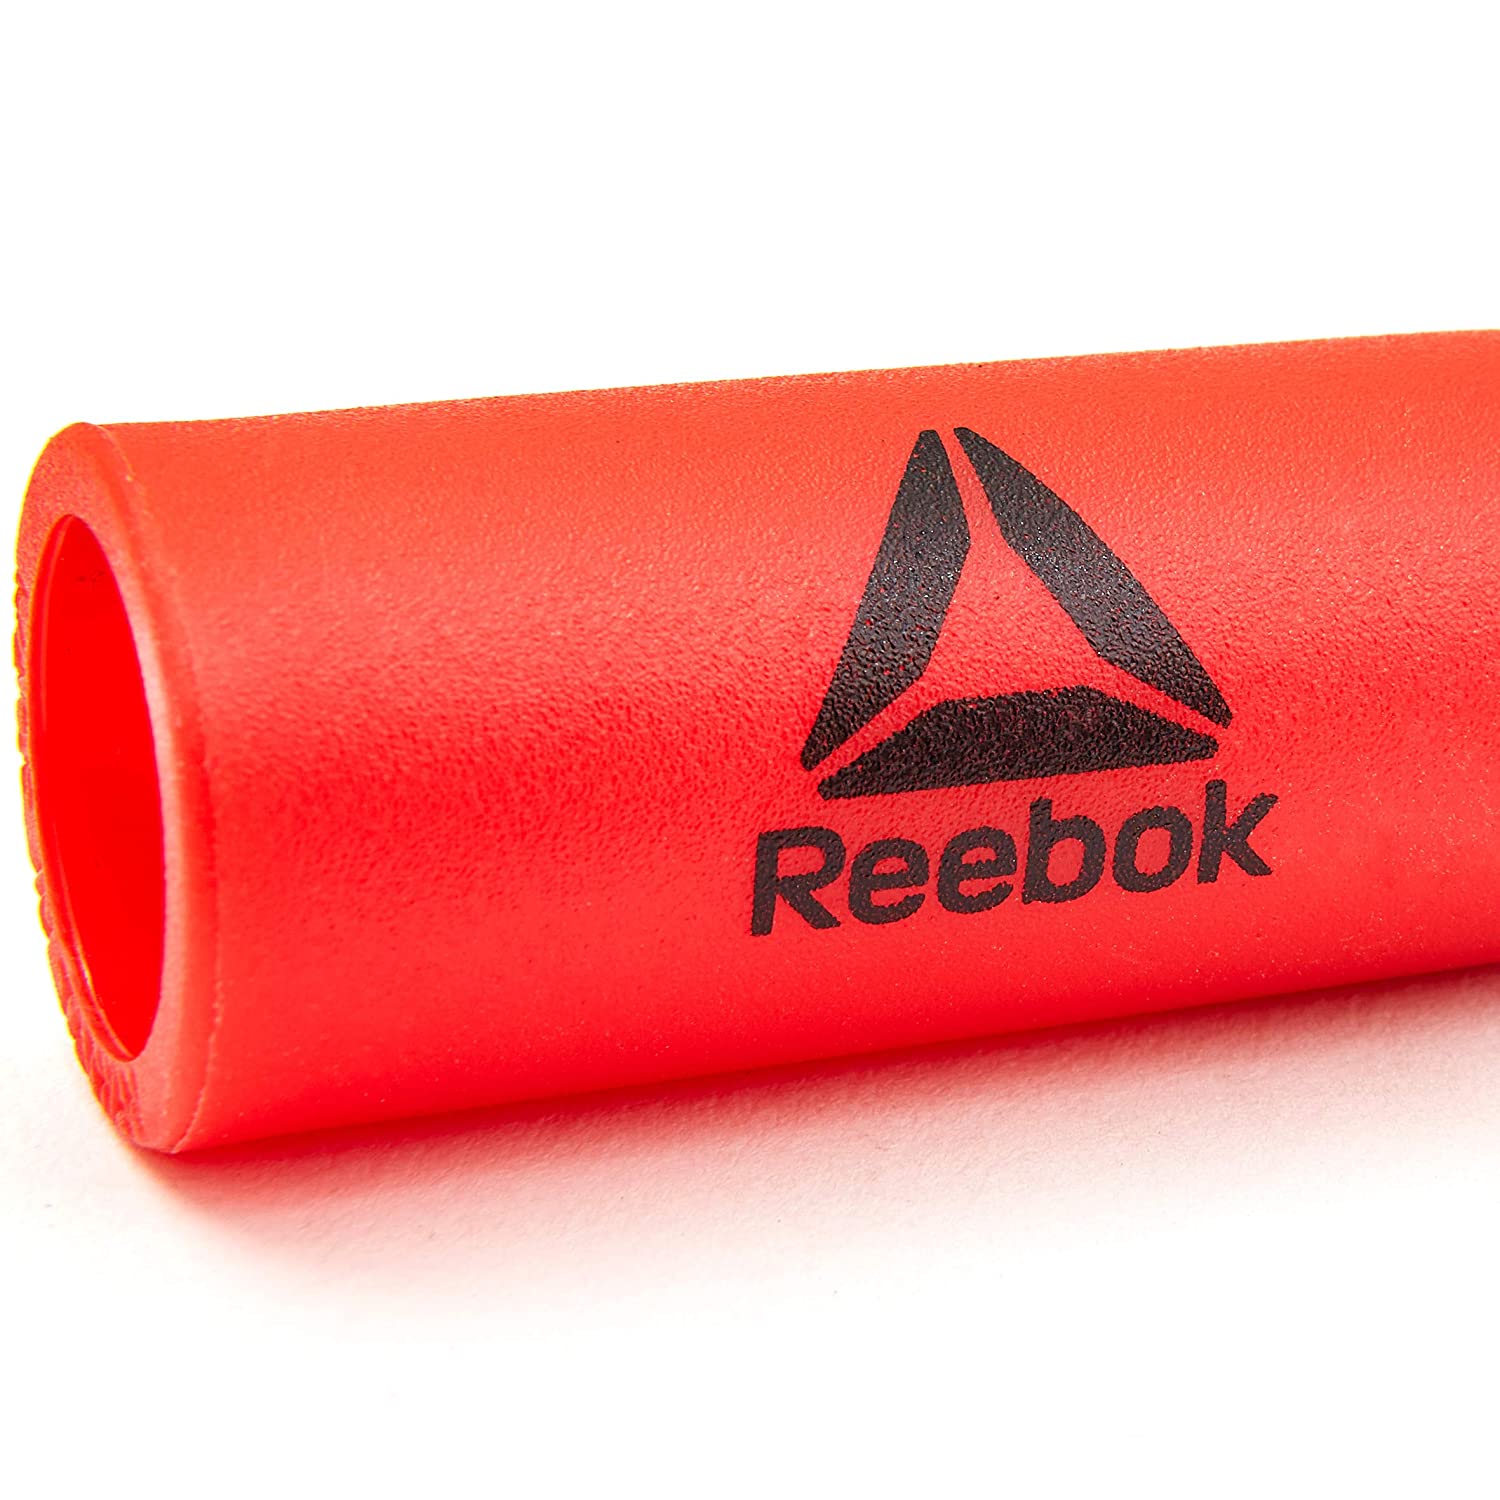 Reebok RARP-11081RD Skipping Rope (Red) - Best Price online Prokicksports.com